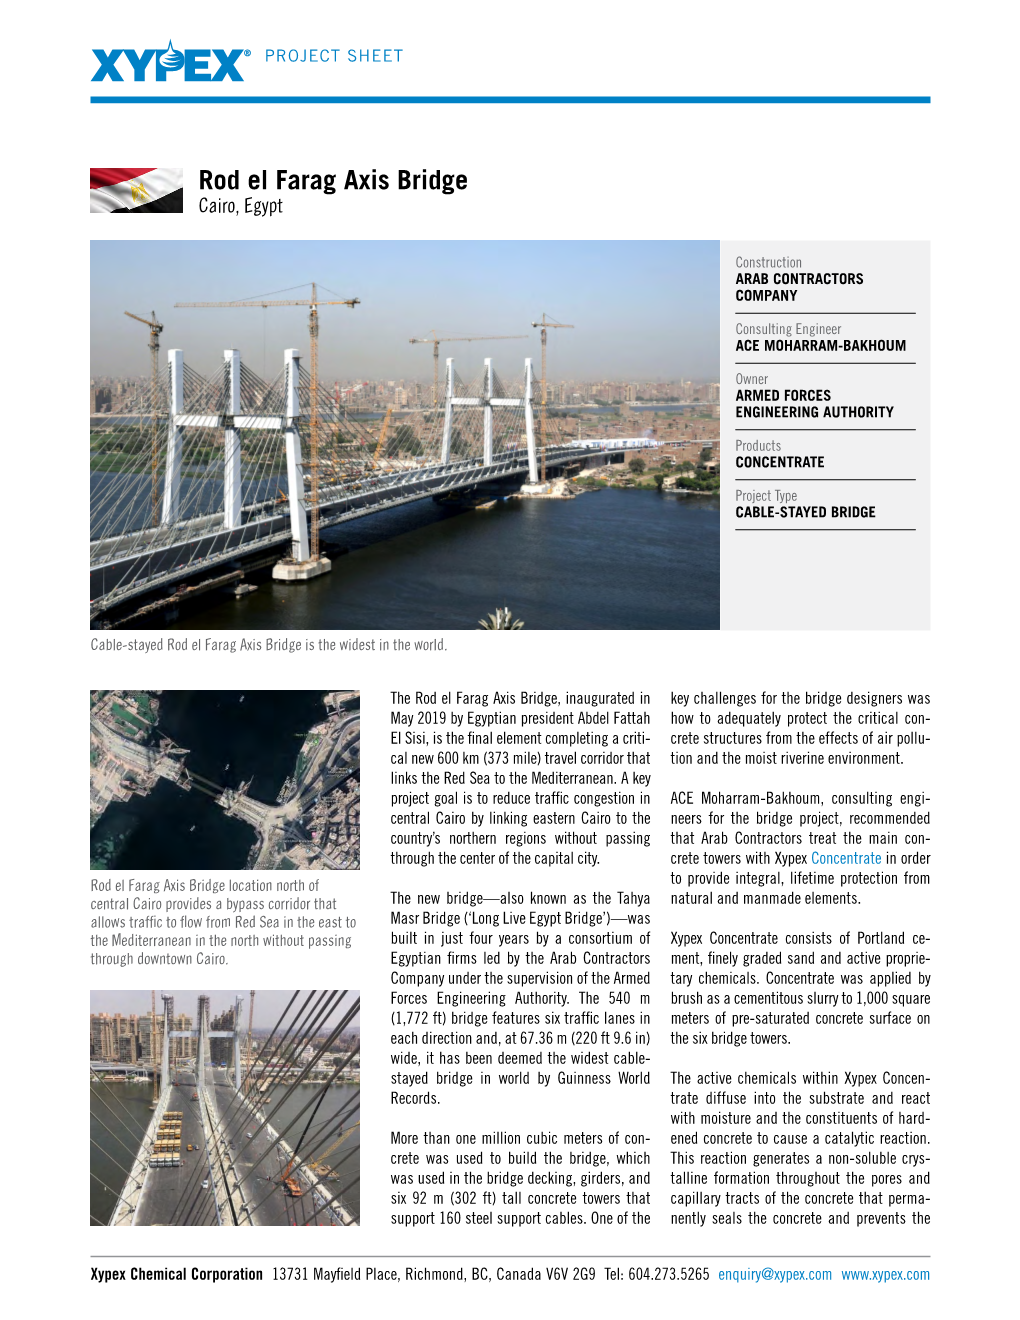 Rod El Farag Axis Bridge Cairo, Egypt